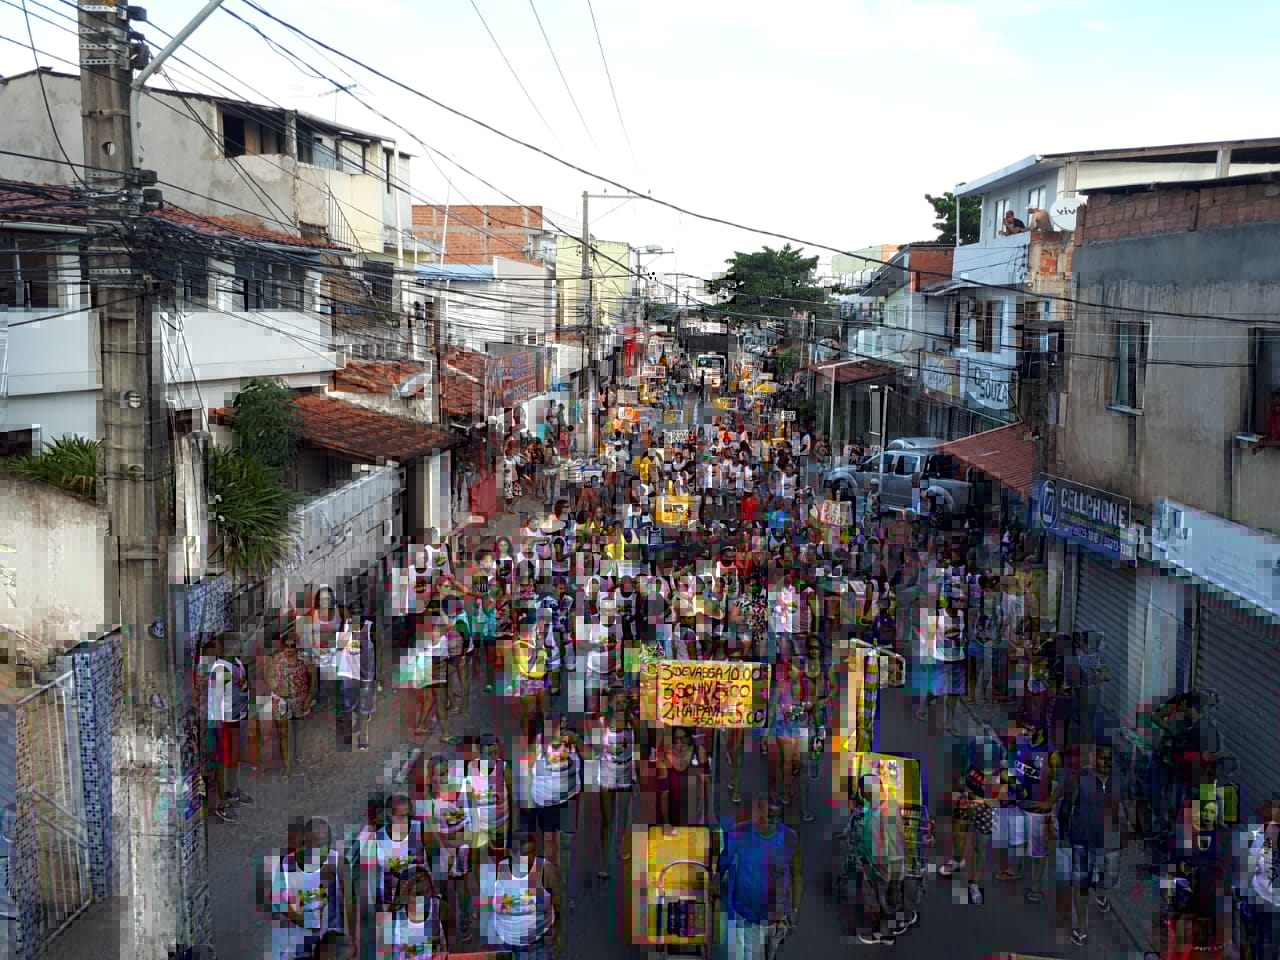 Ps-Carnaval levou diverso aos moradores e renda aos trabalhadores ambulantes na Itinga